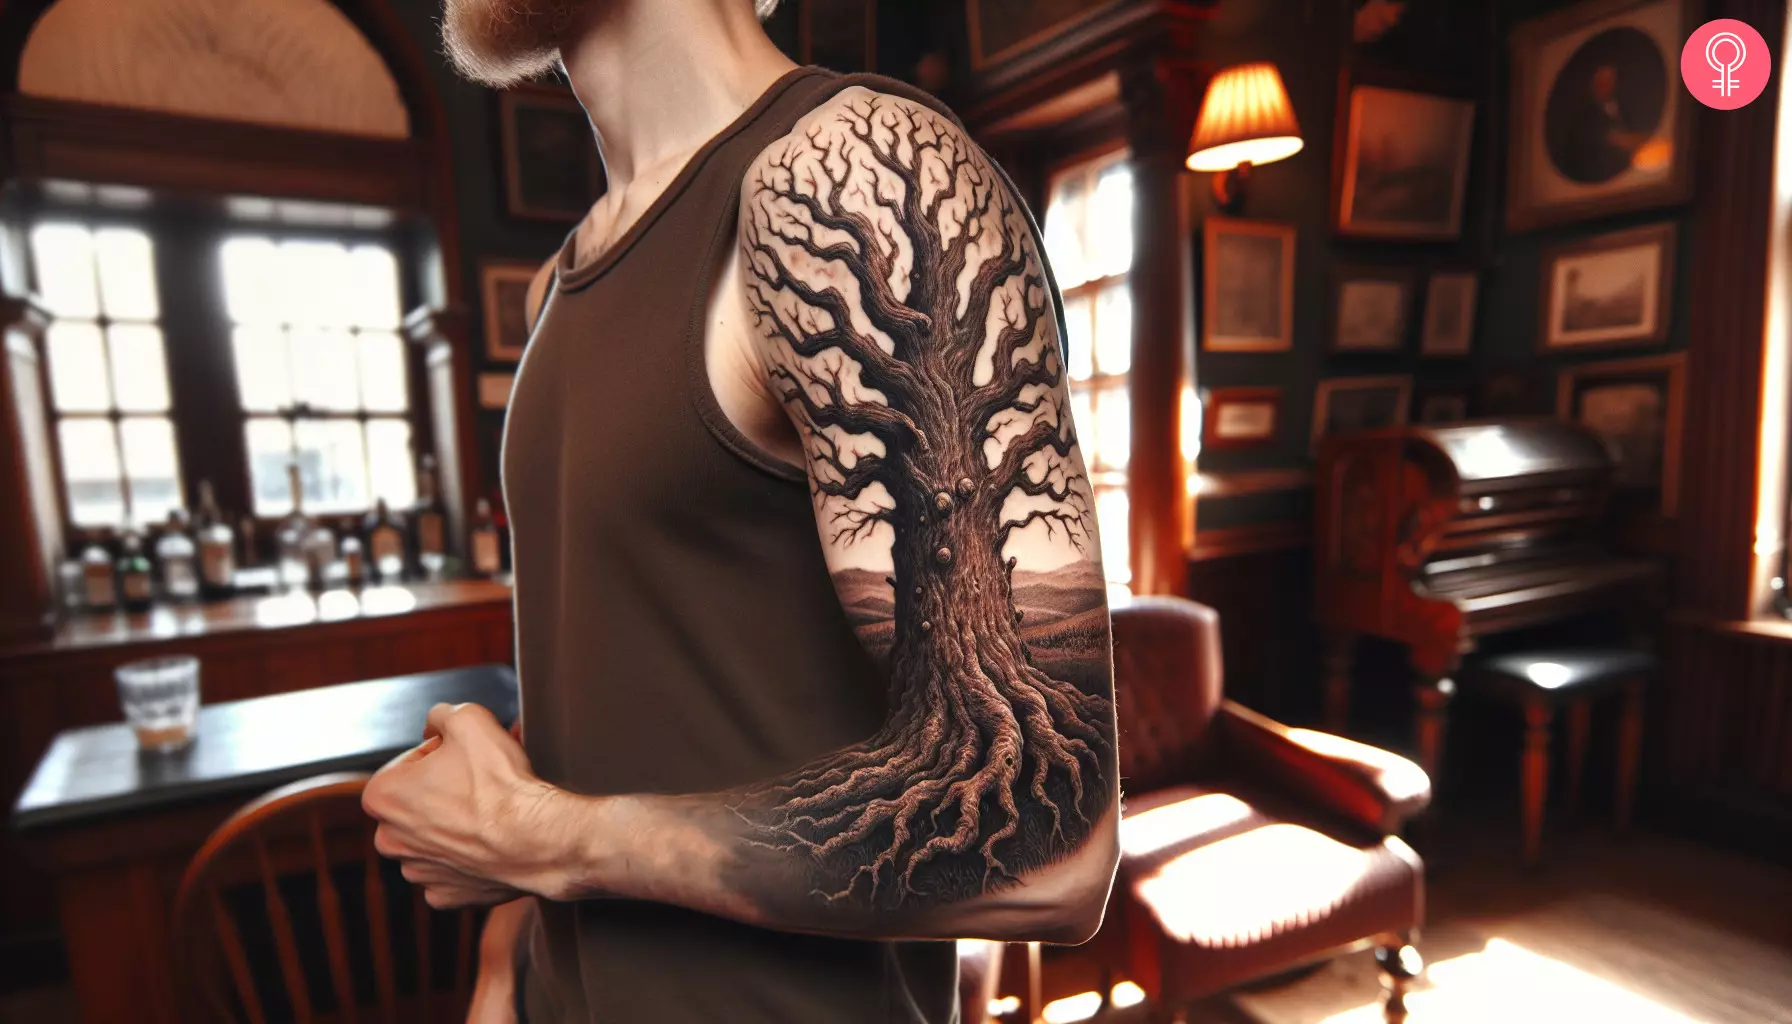 A dead oak tree tattoo on the arm